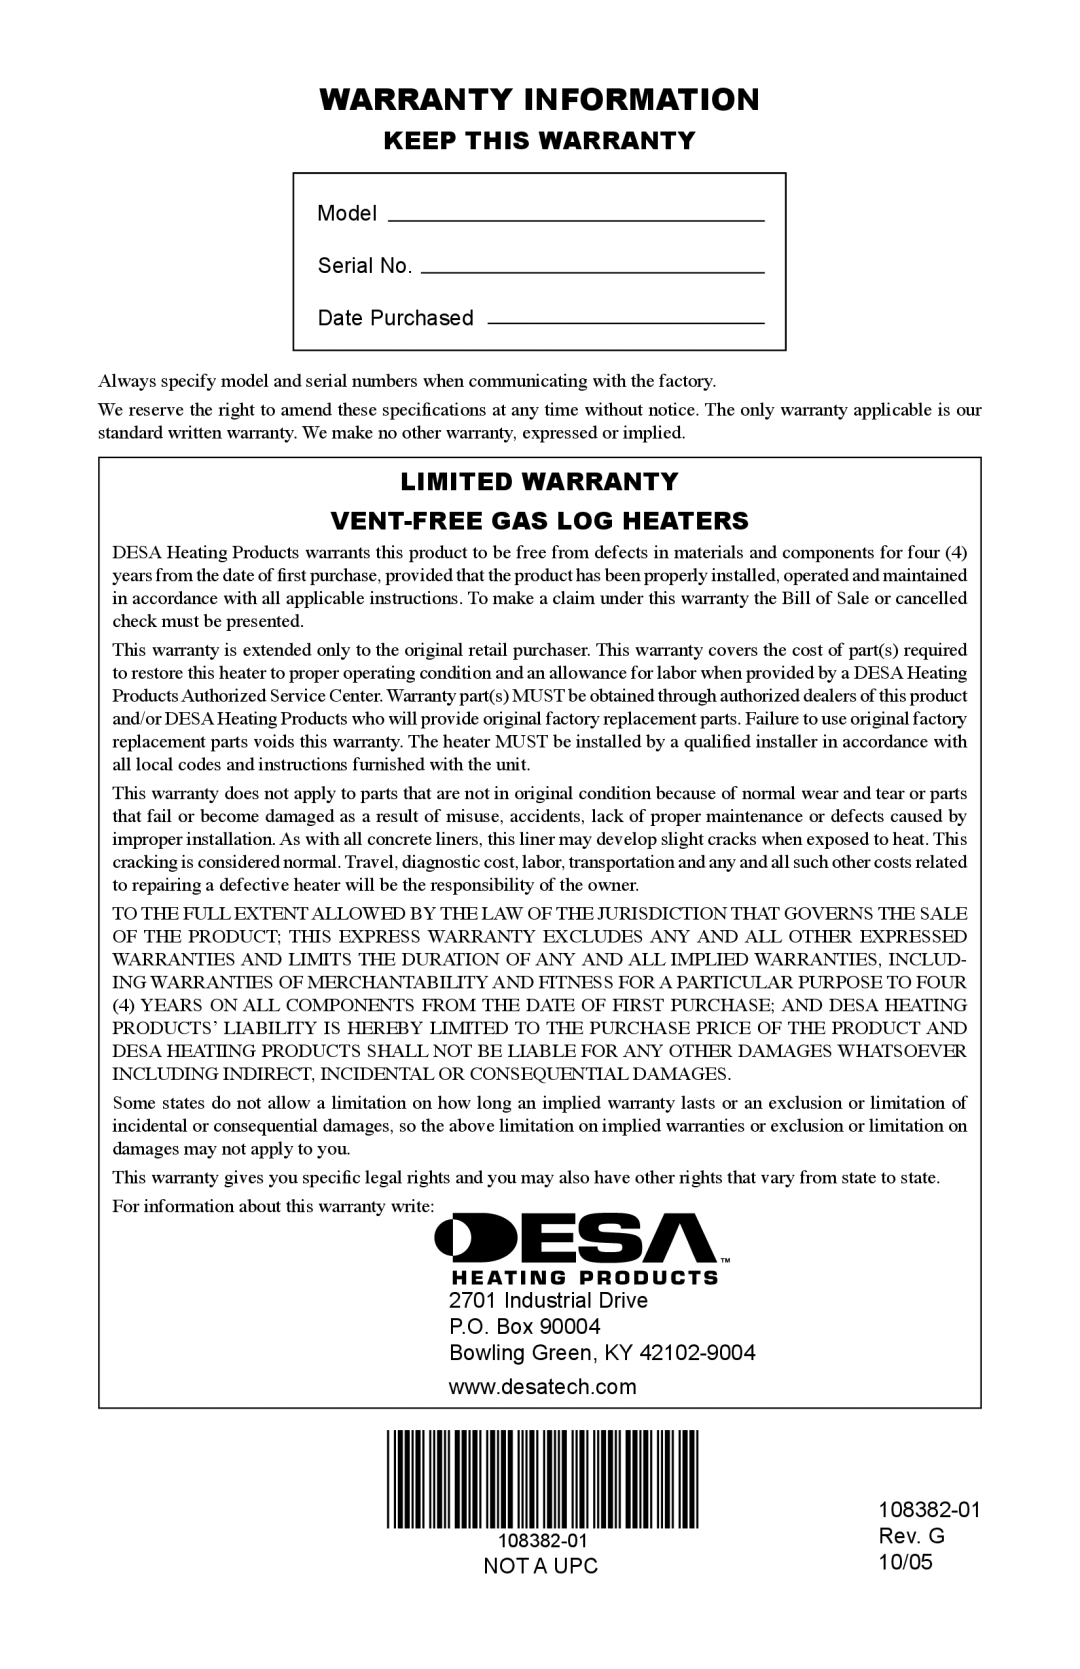 Desa FVFM27PR installation manual Warranty Information, Keep This Warranty, Limited Warranty Vent-Freegas Log Heaters 